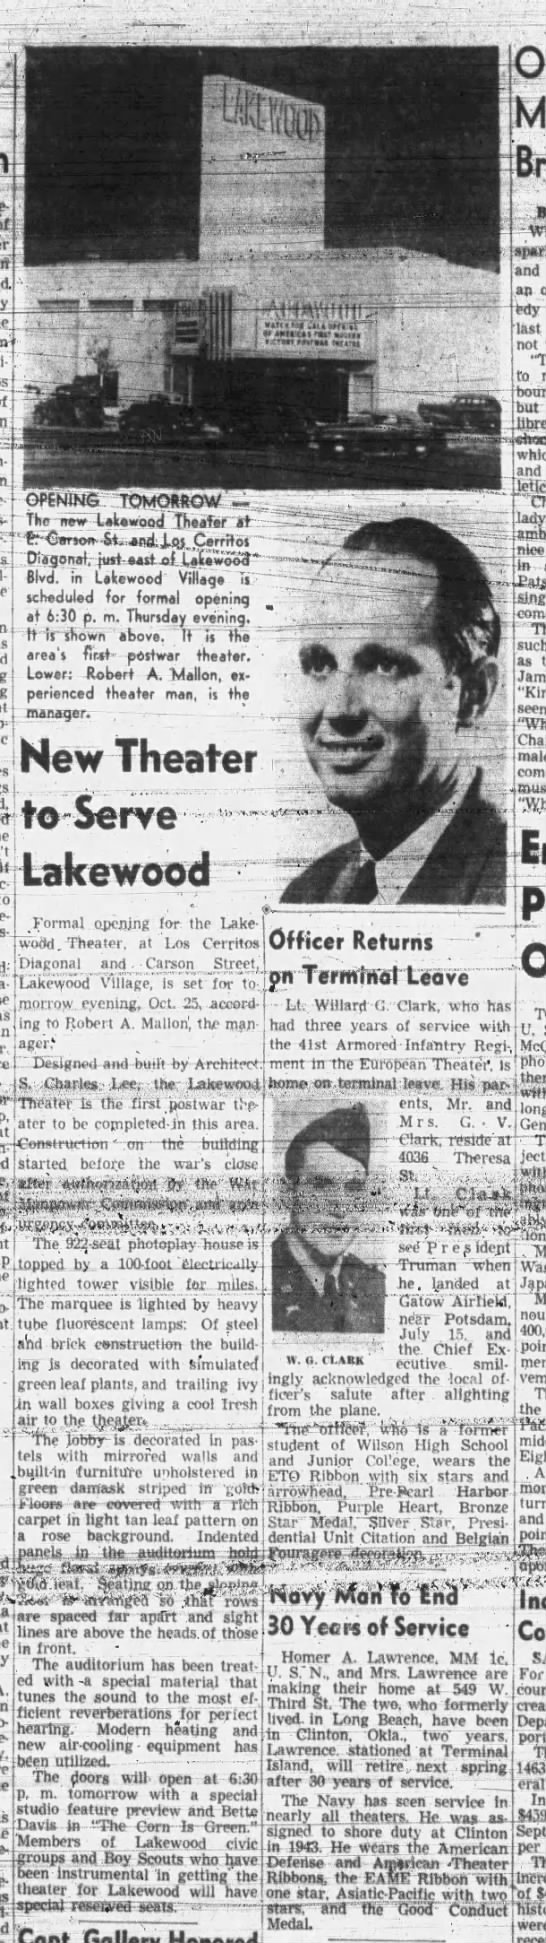 Lakewood theatre opening - 